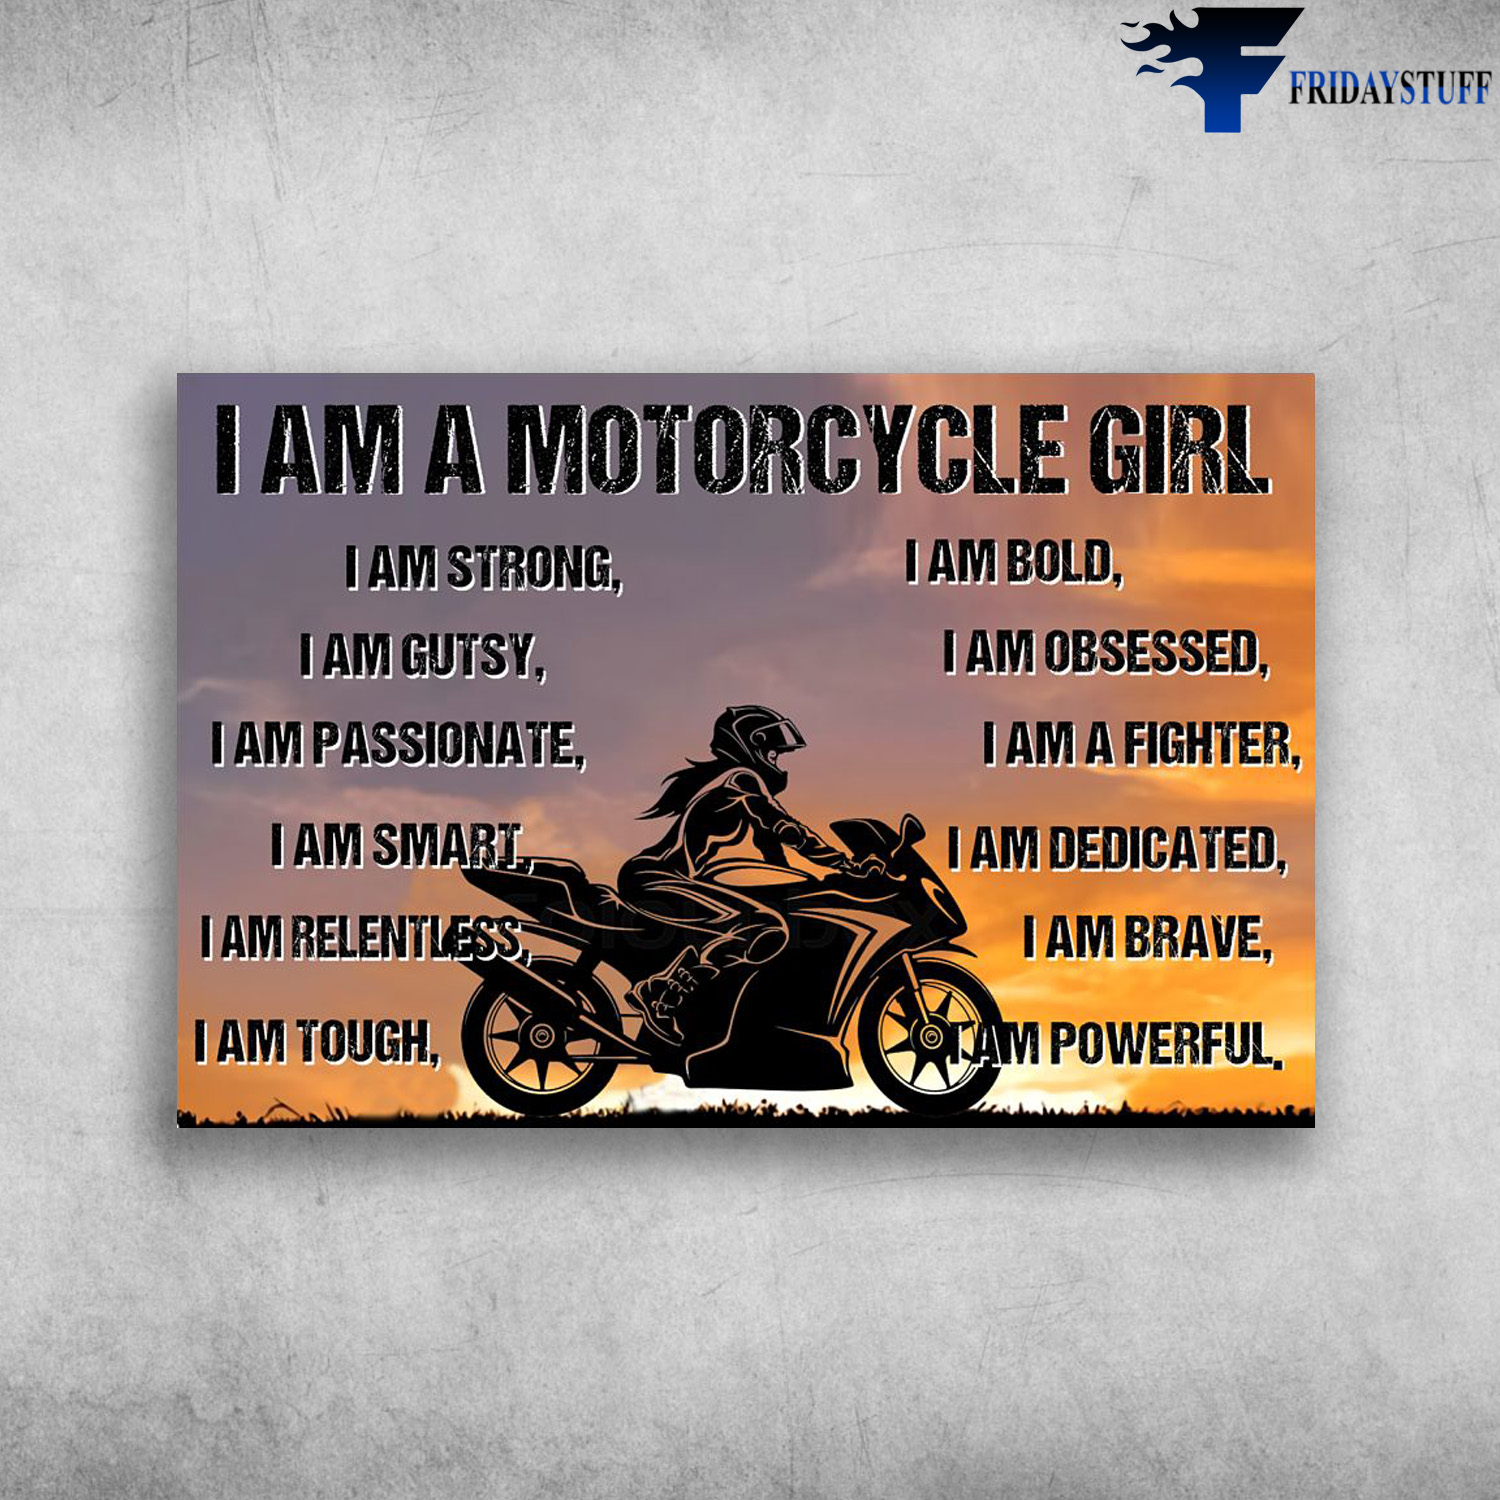 Motorcycle Girl, Girl Motorbike, Biker Lover - I Am A Motorcycle Girl, I Am Strong, I Am Gutsy, I Am Passionate, I Am Obsessed, I Am Fighter, I Am Smart, I Am Dedicated, I Am Relentless, I Am Brave, I Am Tough, I A Powerful